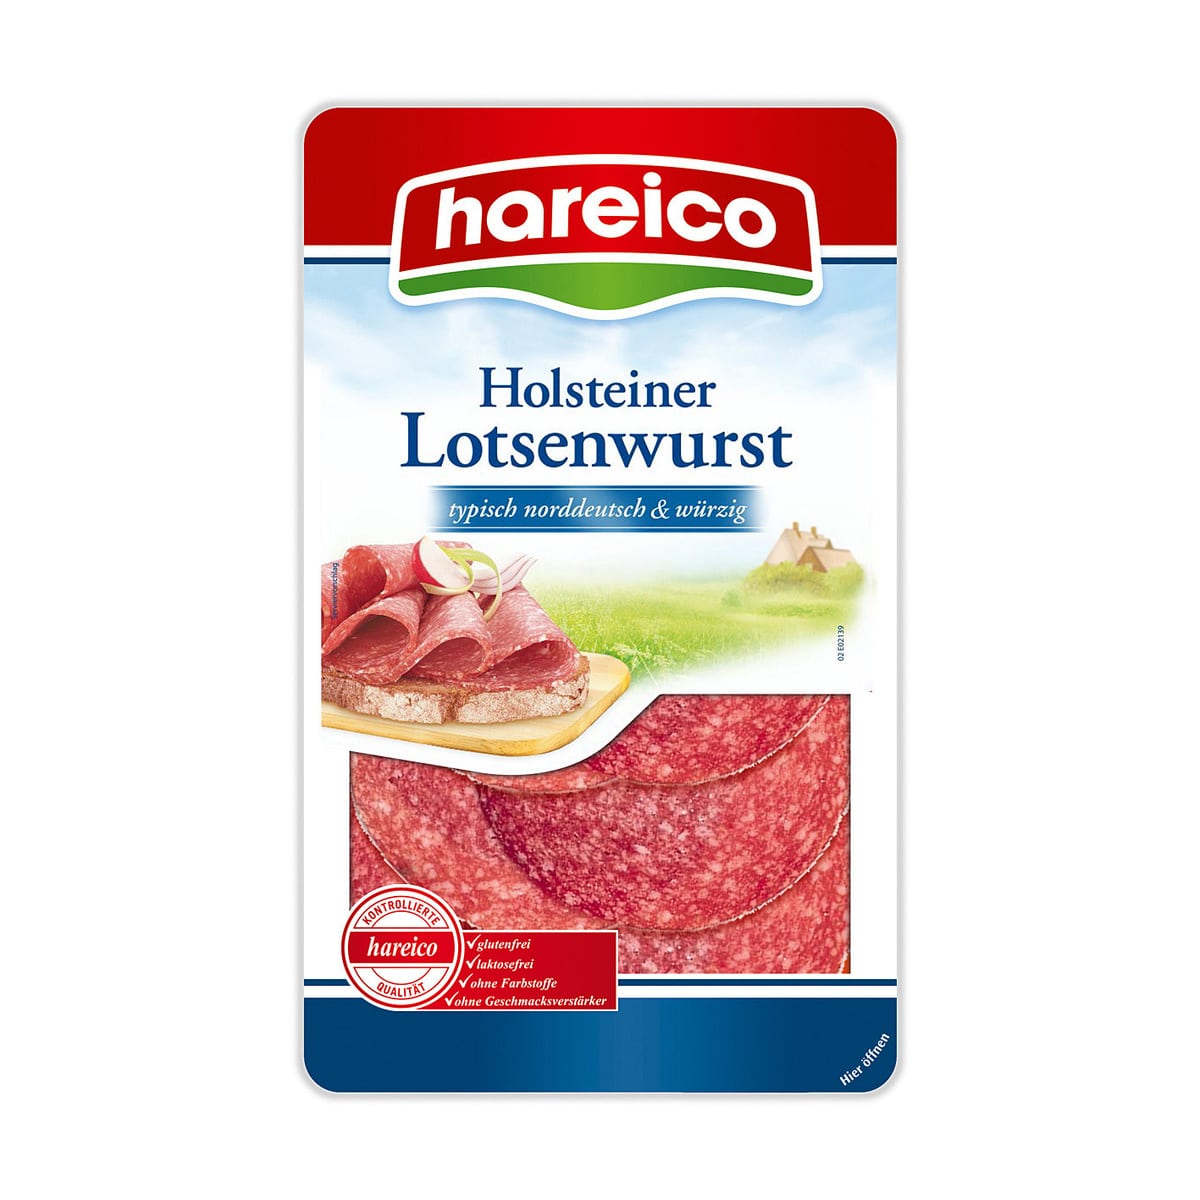 Hareico Holsteiner Lotsenwurst 80g